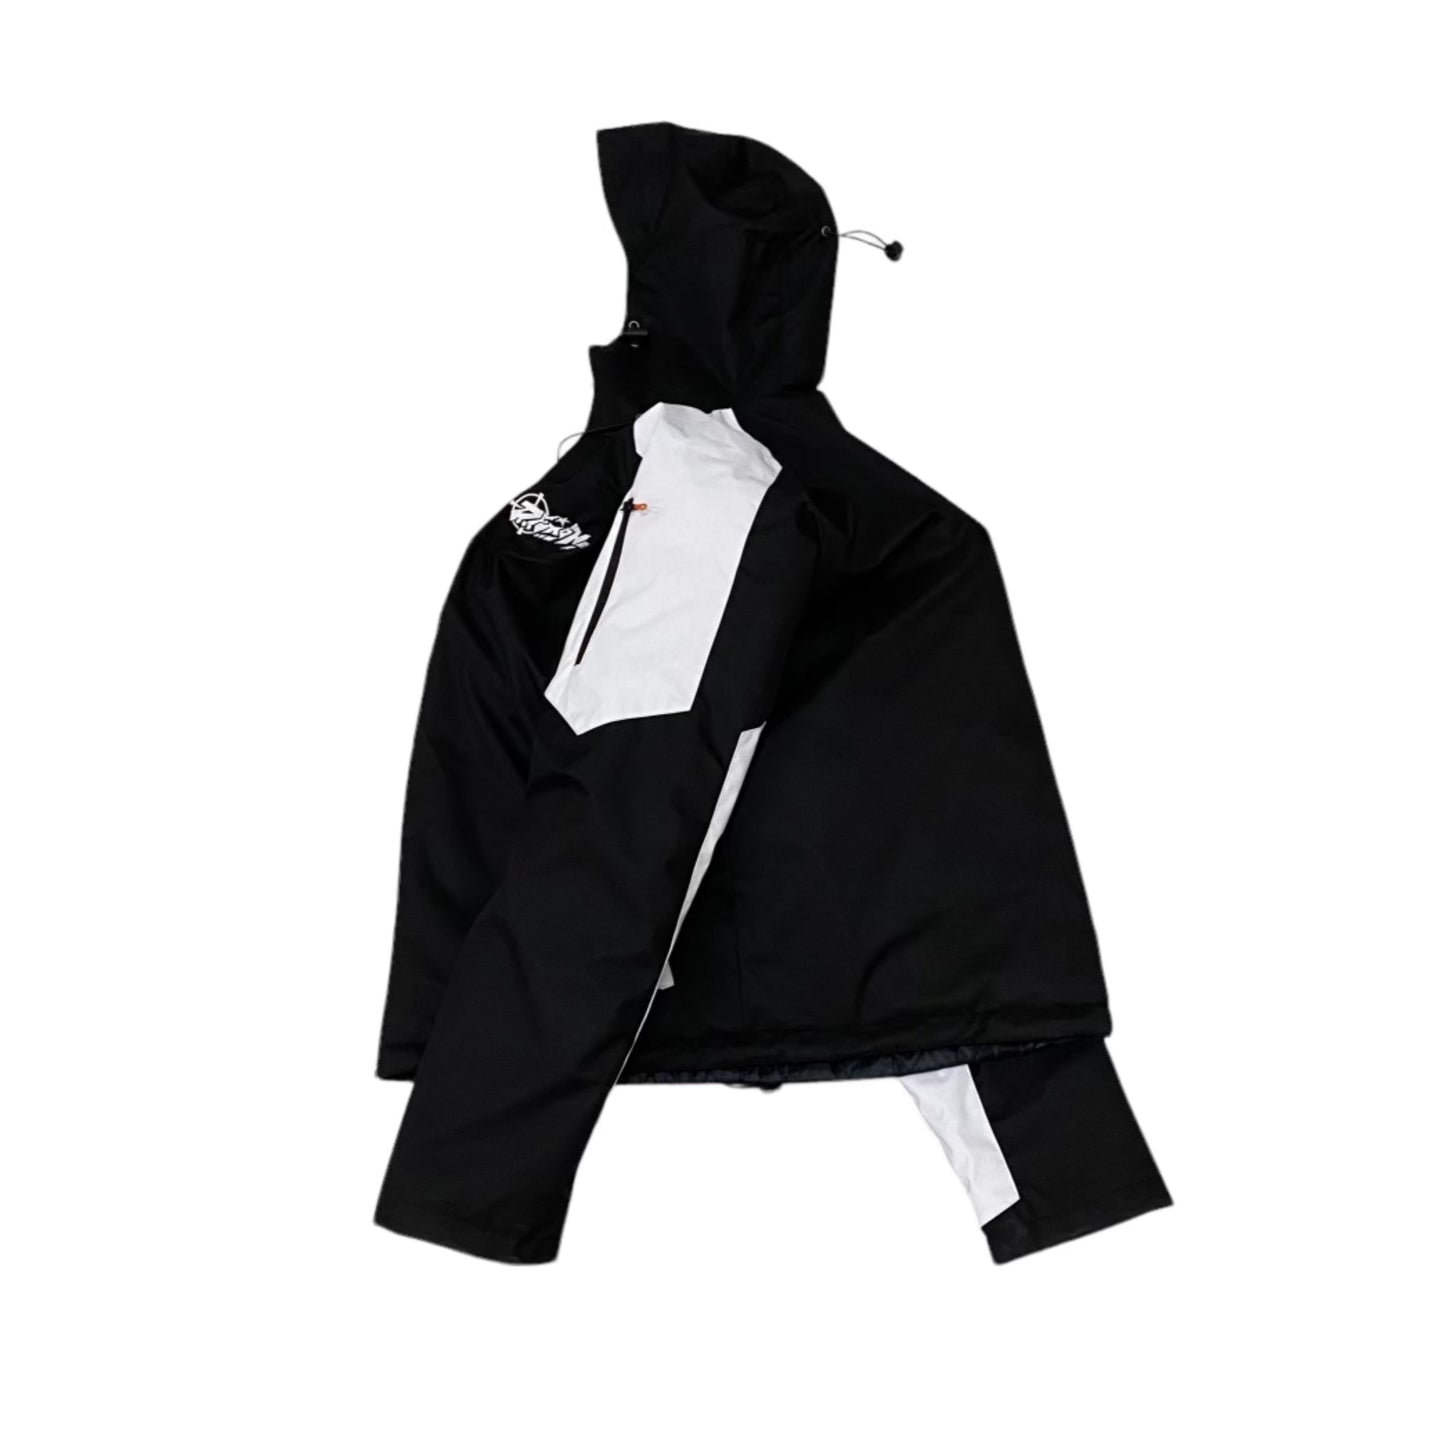 “Demons Club” Windbreaker Jacket